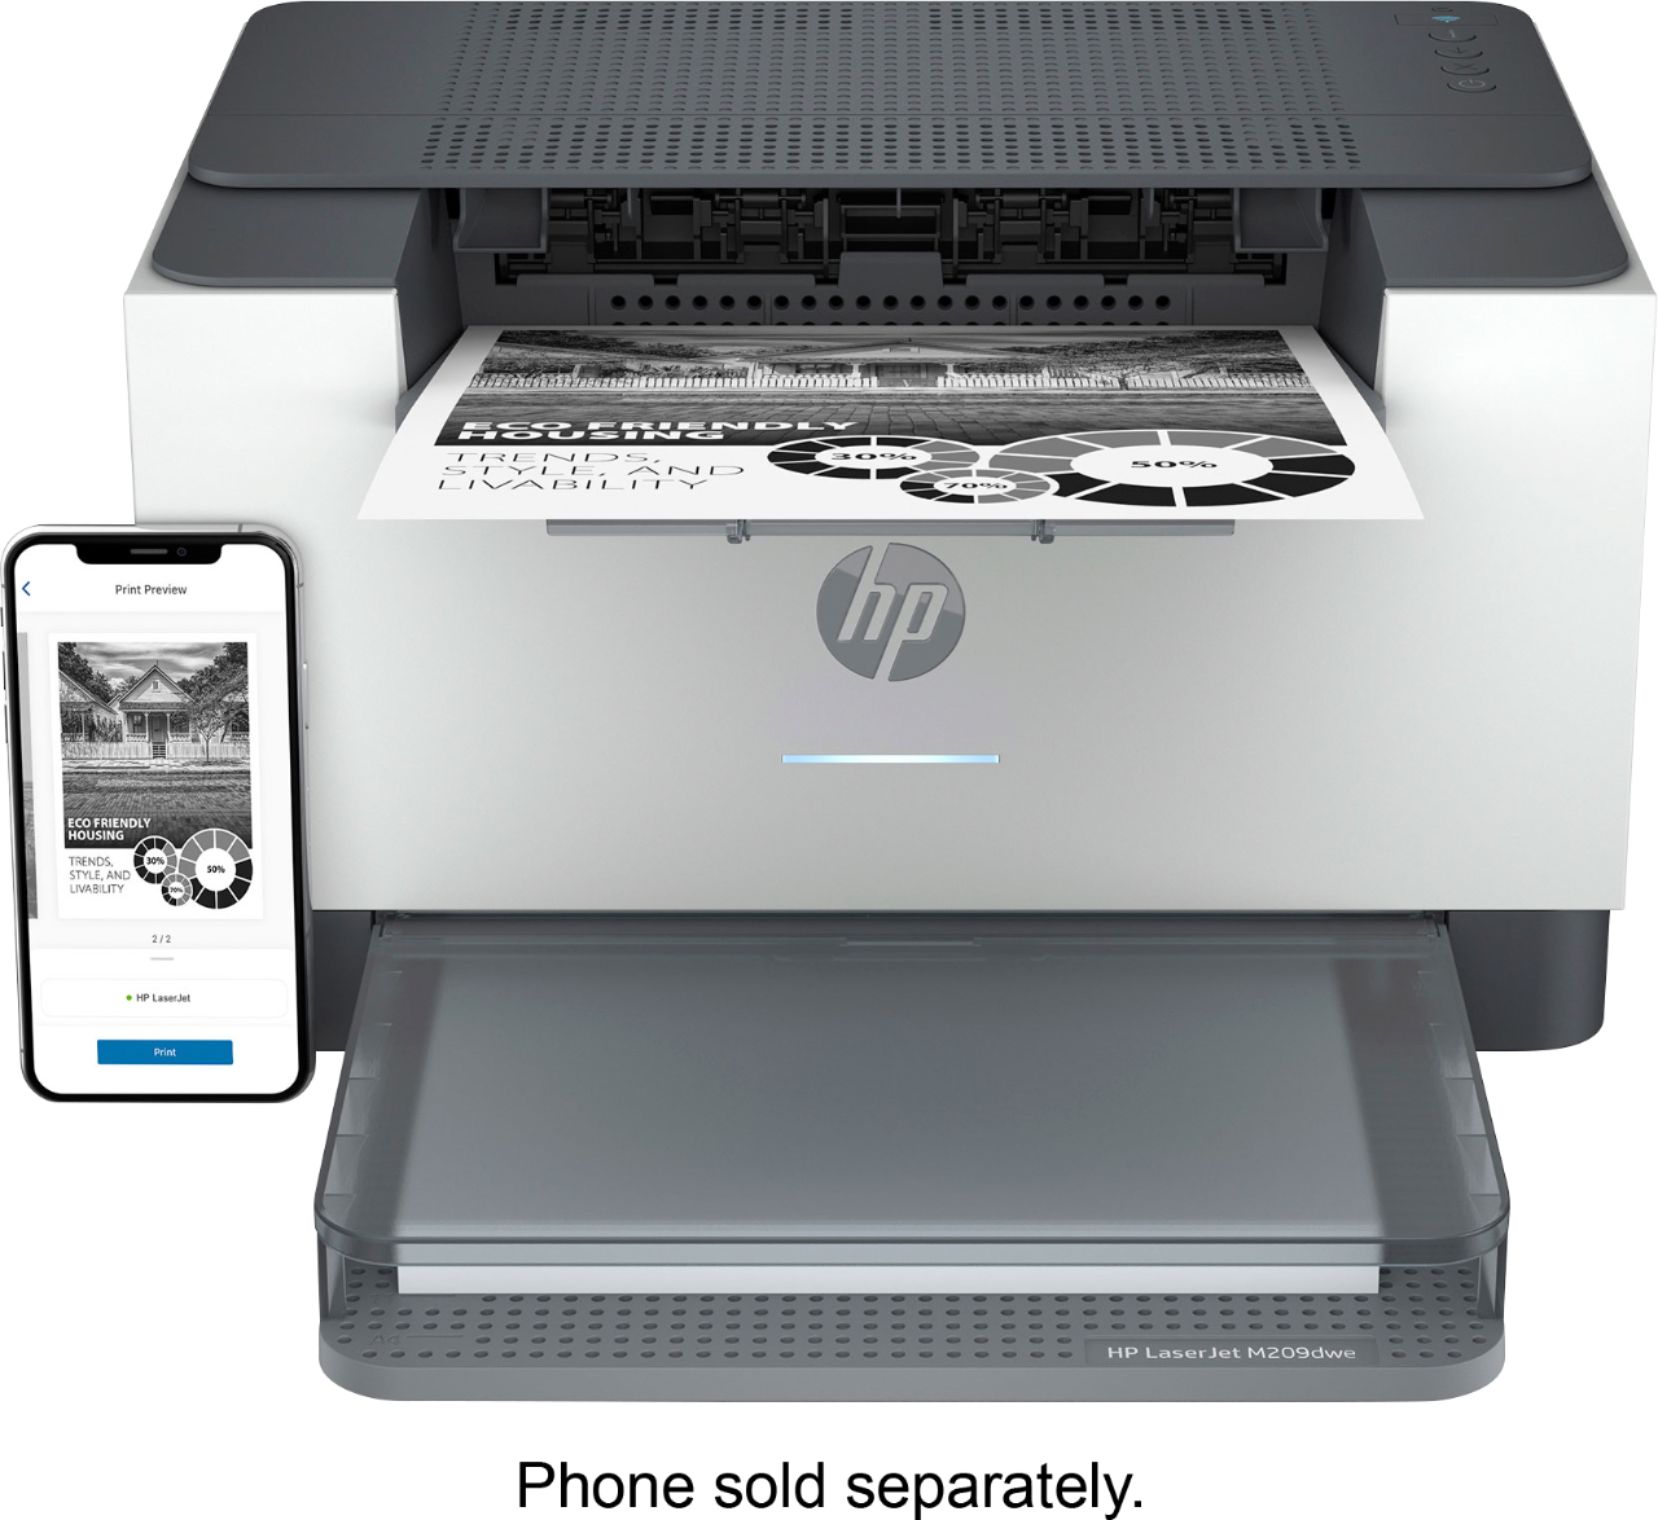 haar amplitude vergeven HP LaserJet M209dwe Wireless Black-and-White Laser Printer with 6 months of  Toner through HP+ White & Slate M209dwe - Best Buy